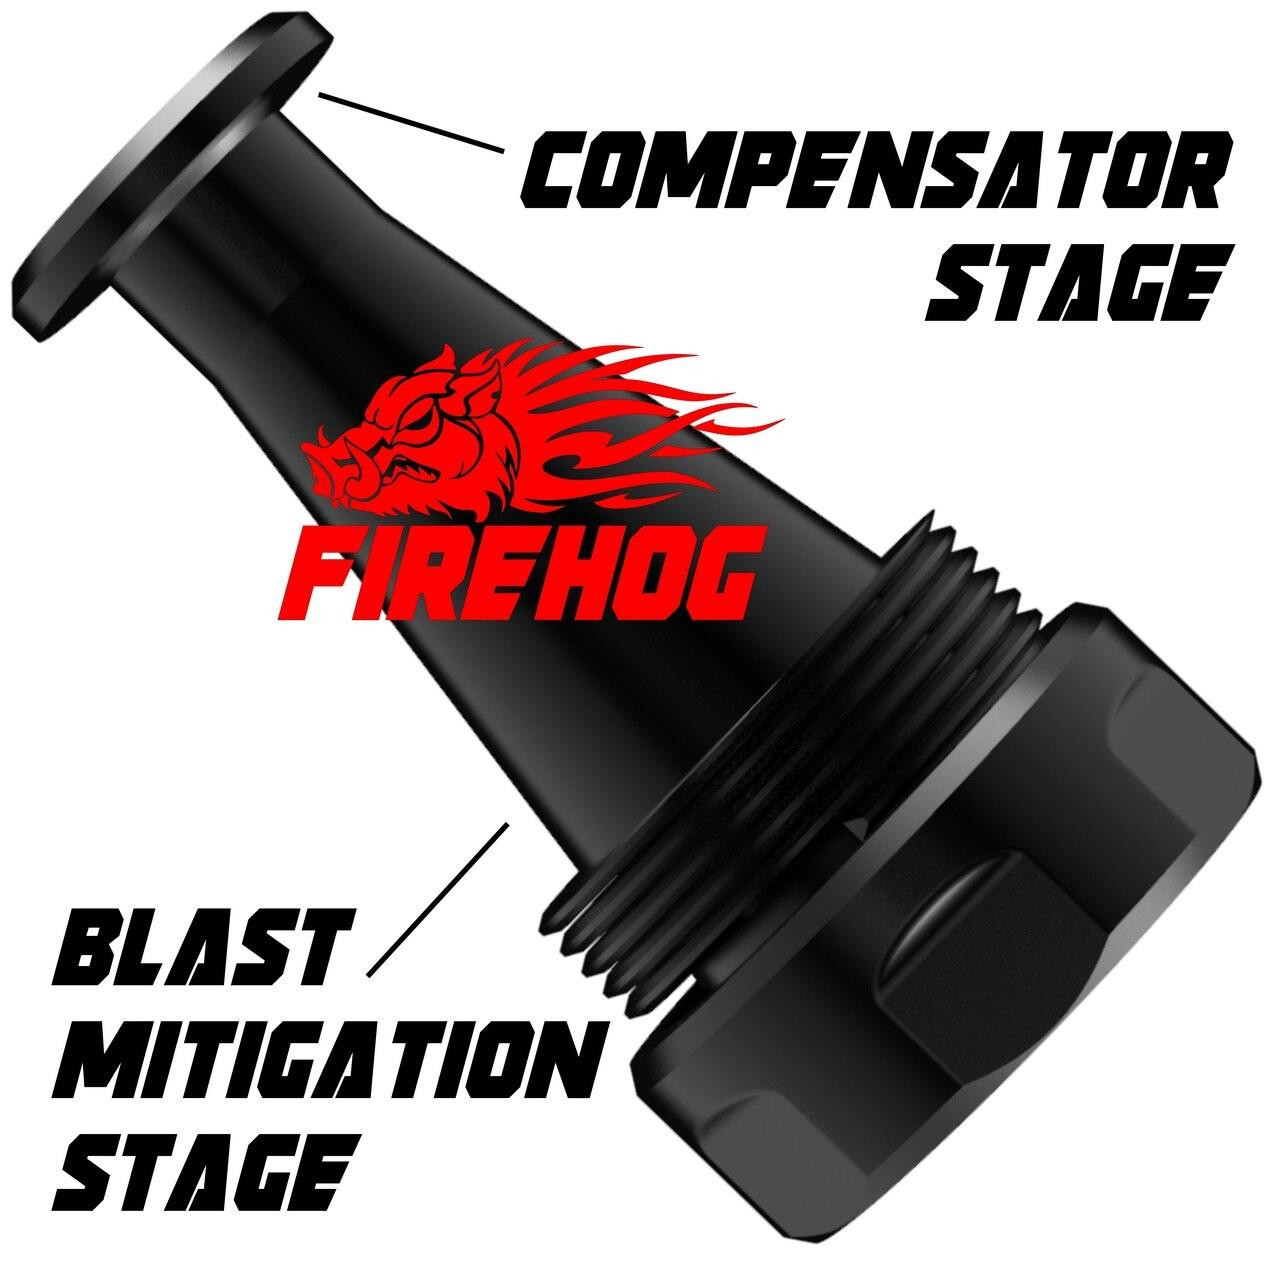 FIREHOG Fire Hog Mod-FMC Black- Flash Suppressor Muzzle Blast Mitigation Brake System